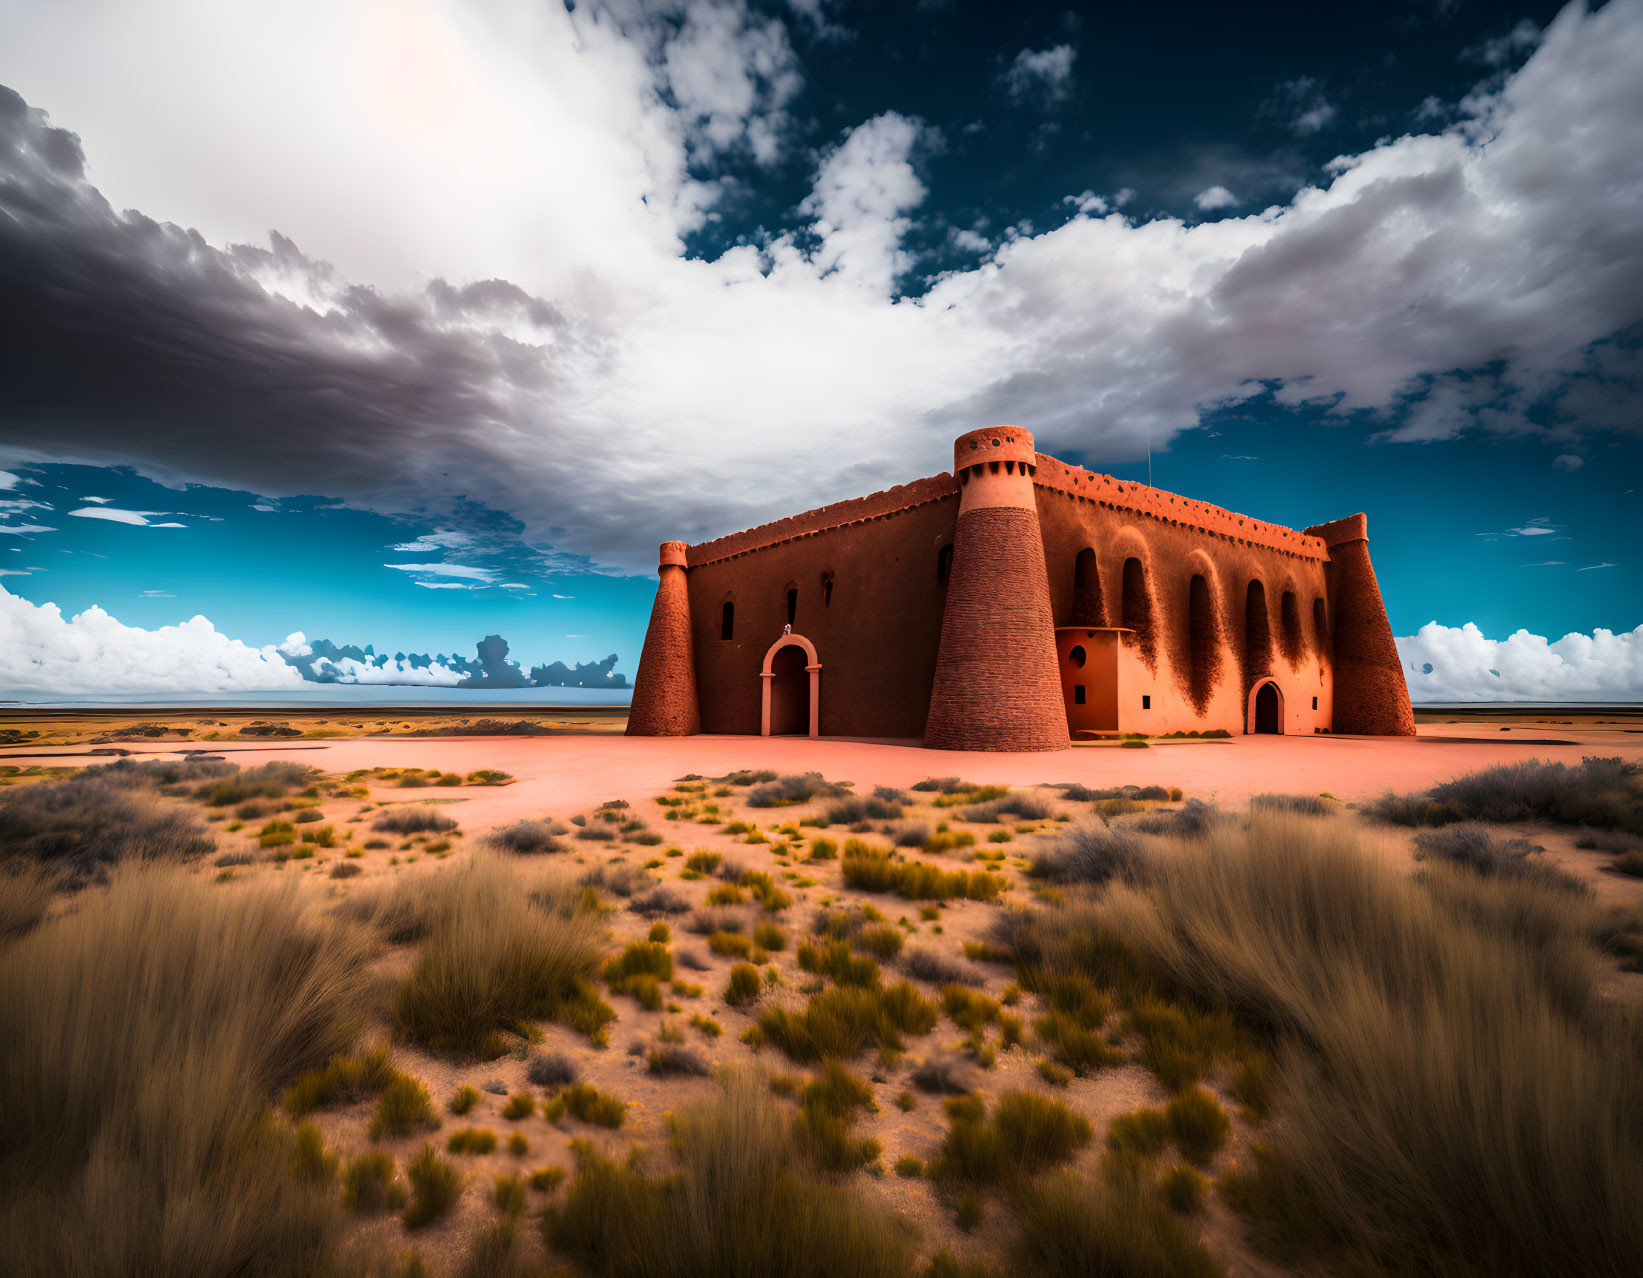 Adobe Fortification in Desert Landscape Under Dramatic Sky